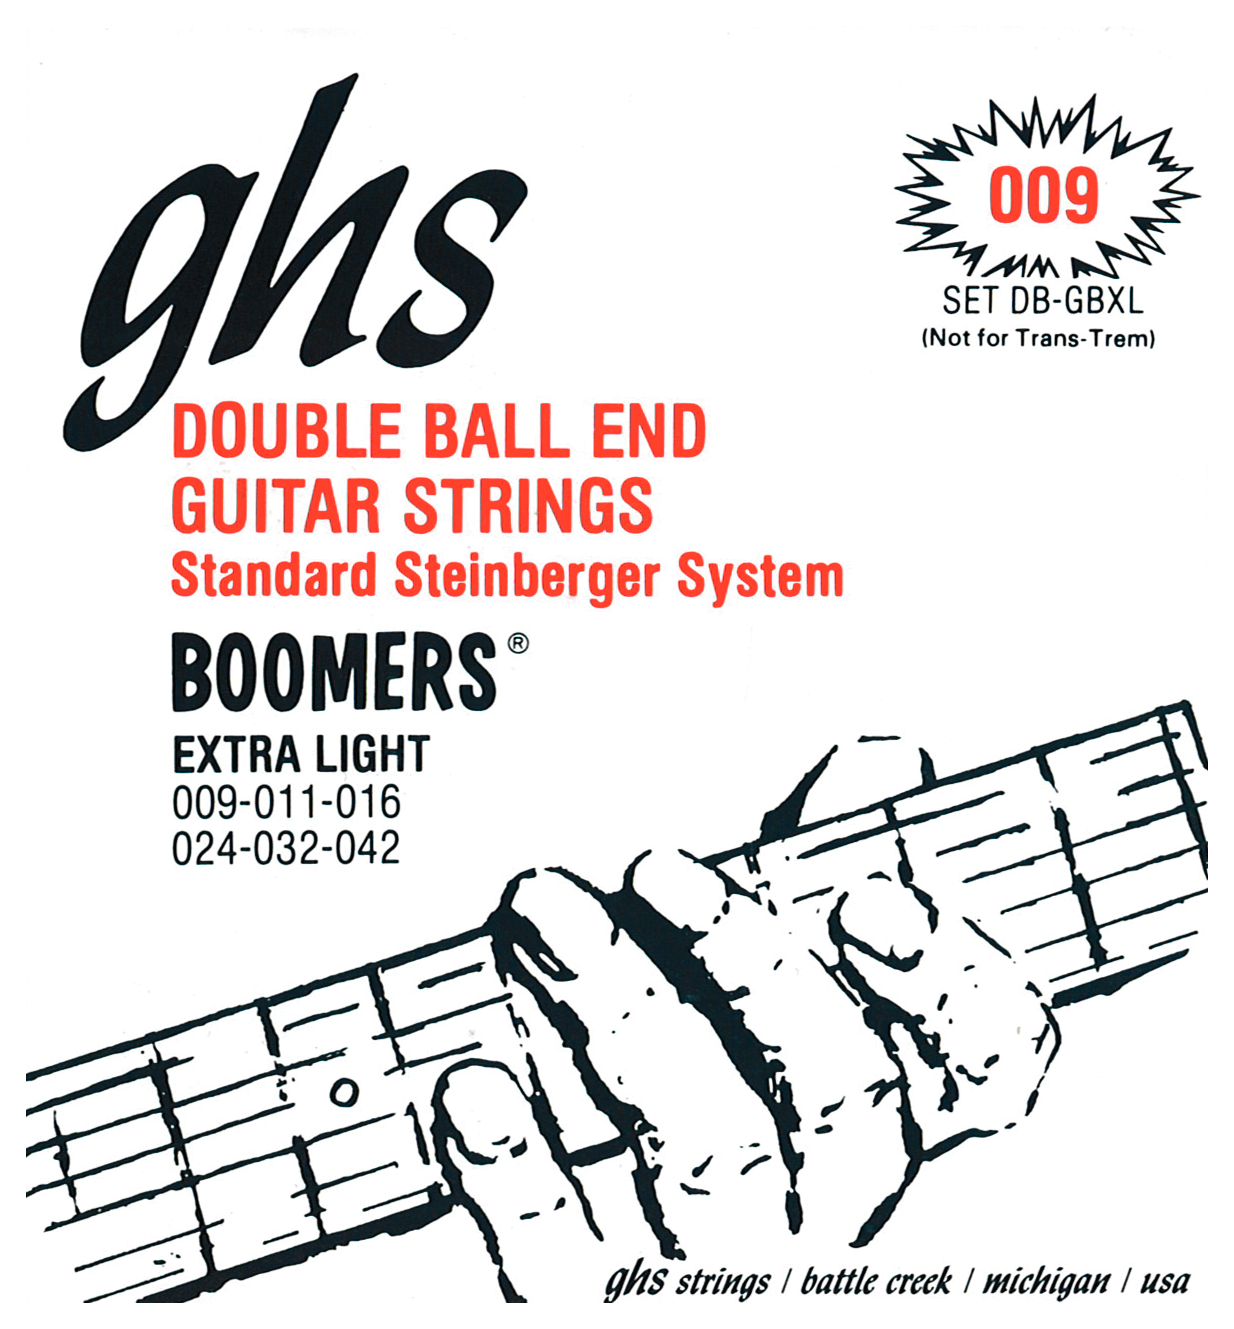 GHS DB-GBXL Boomers 009-042